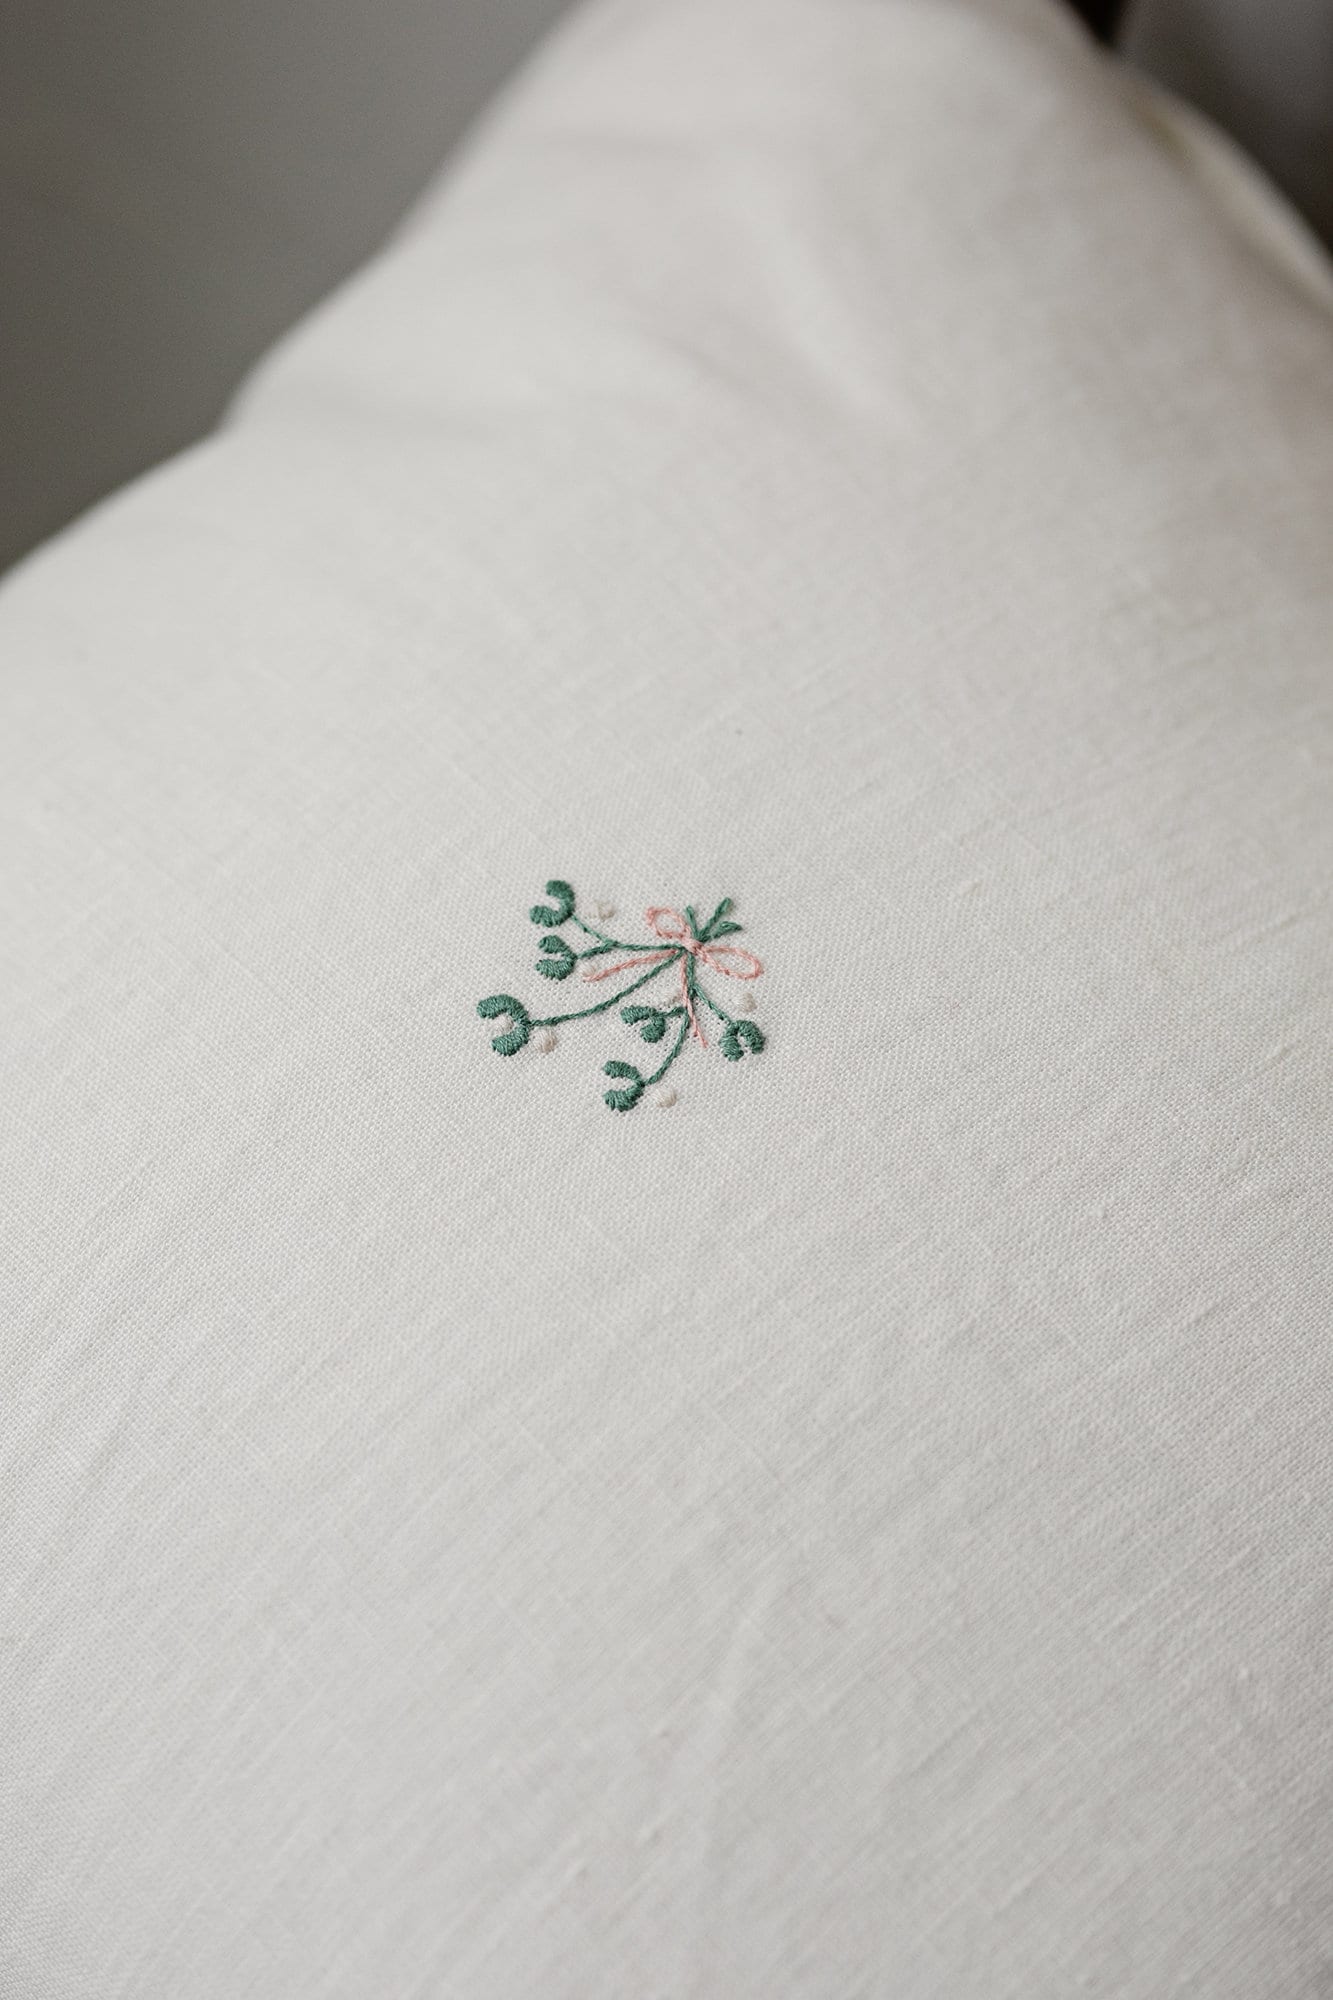 White Christmas Linen Pillowcase